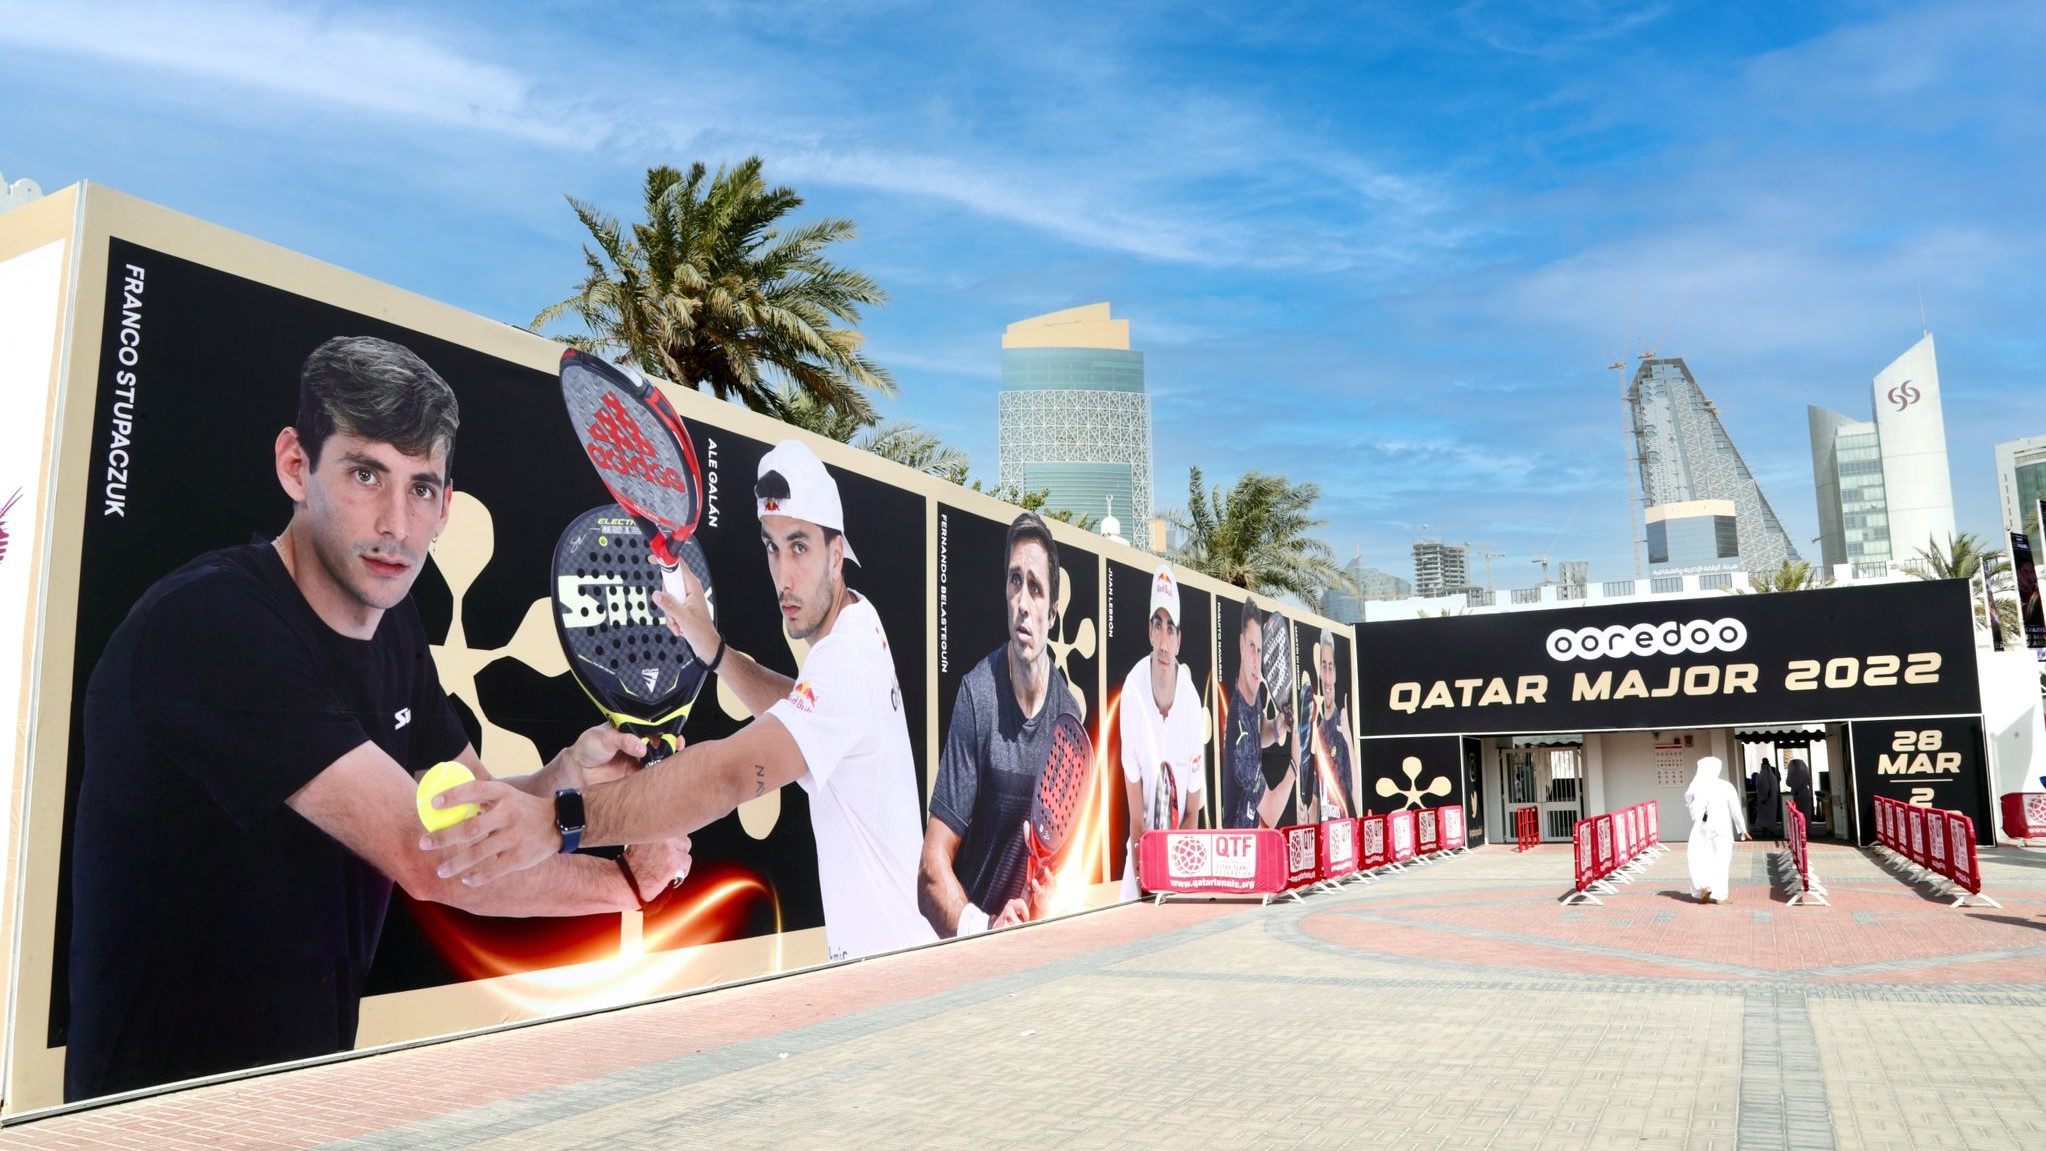 Panorama ooredoo qatar major 2022 premier padel